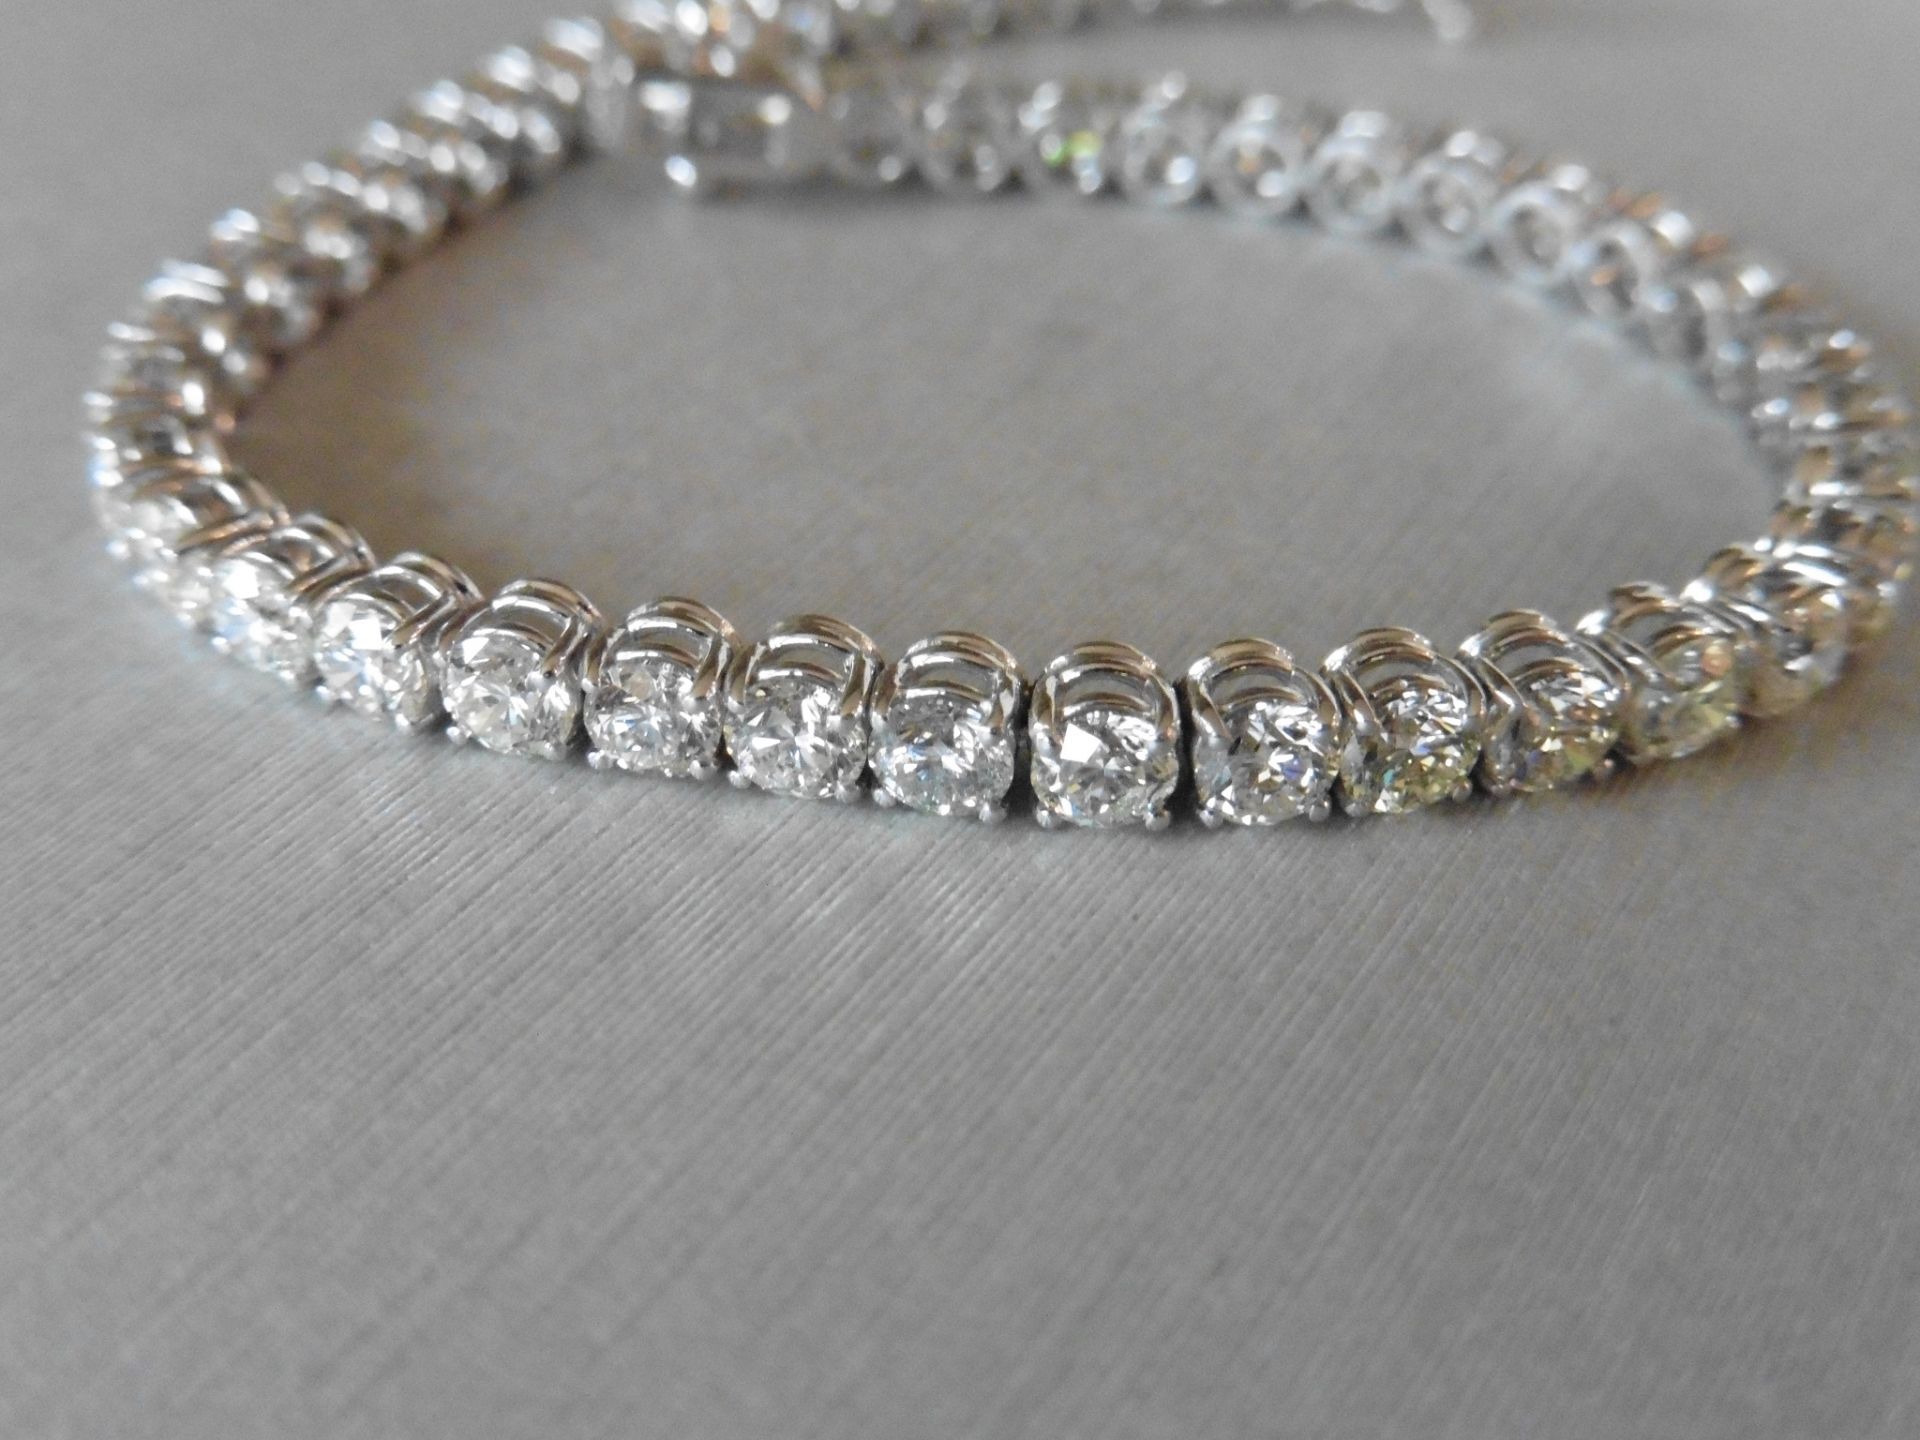 10.60ct Diamond tennis bracelet set with brilliant cut diamonds of I colour, si3 clarity. All set in